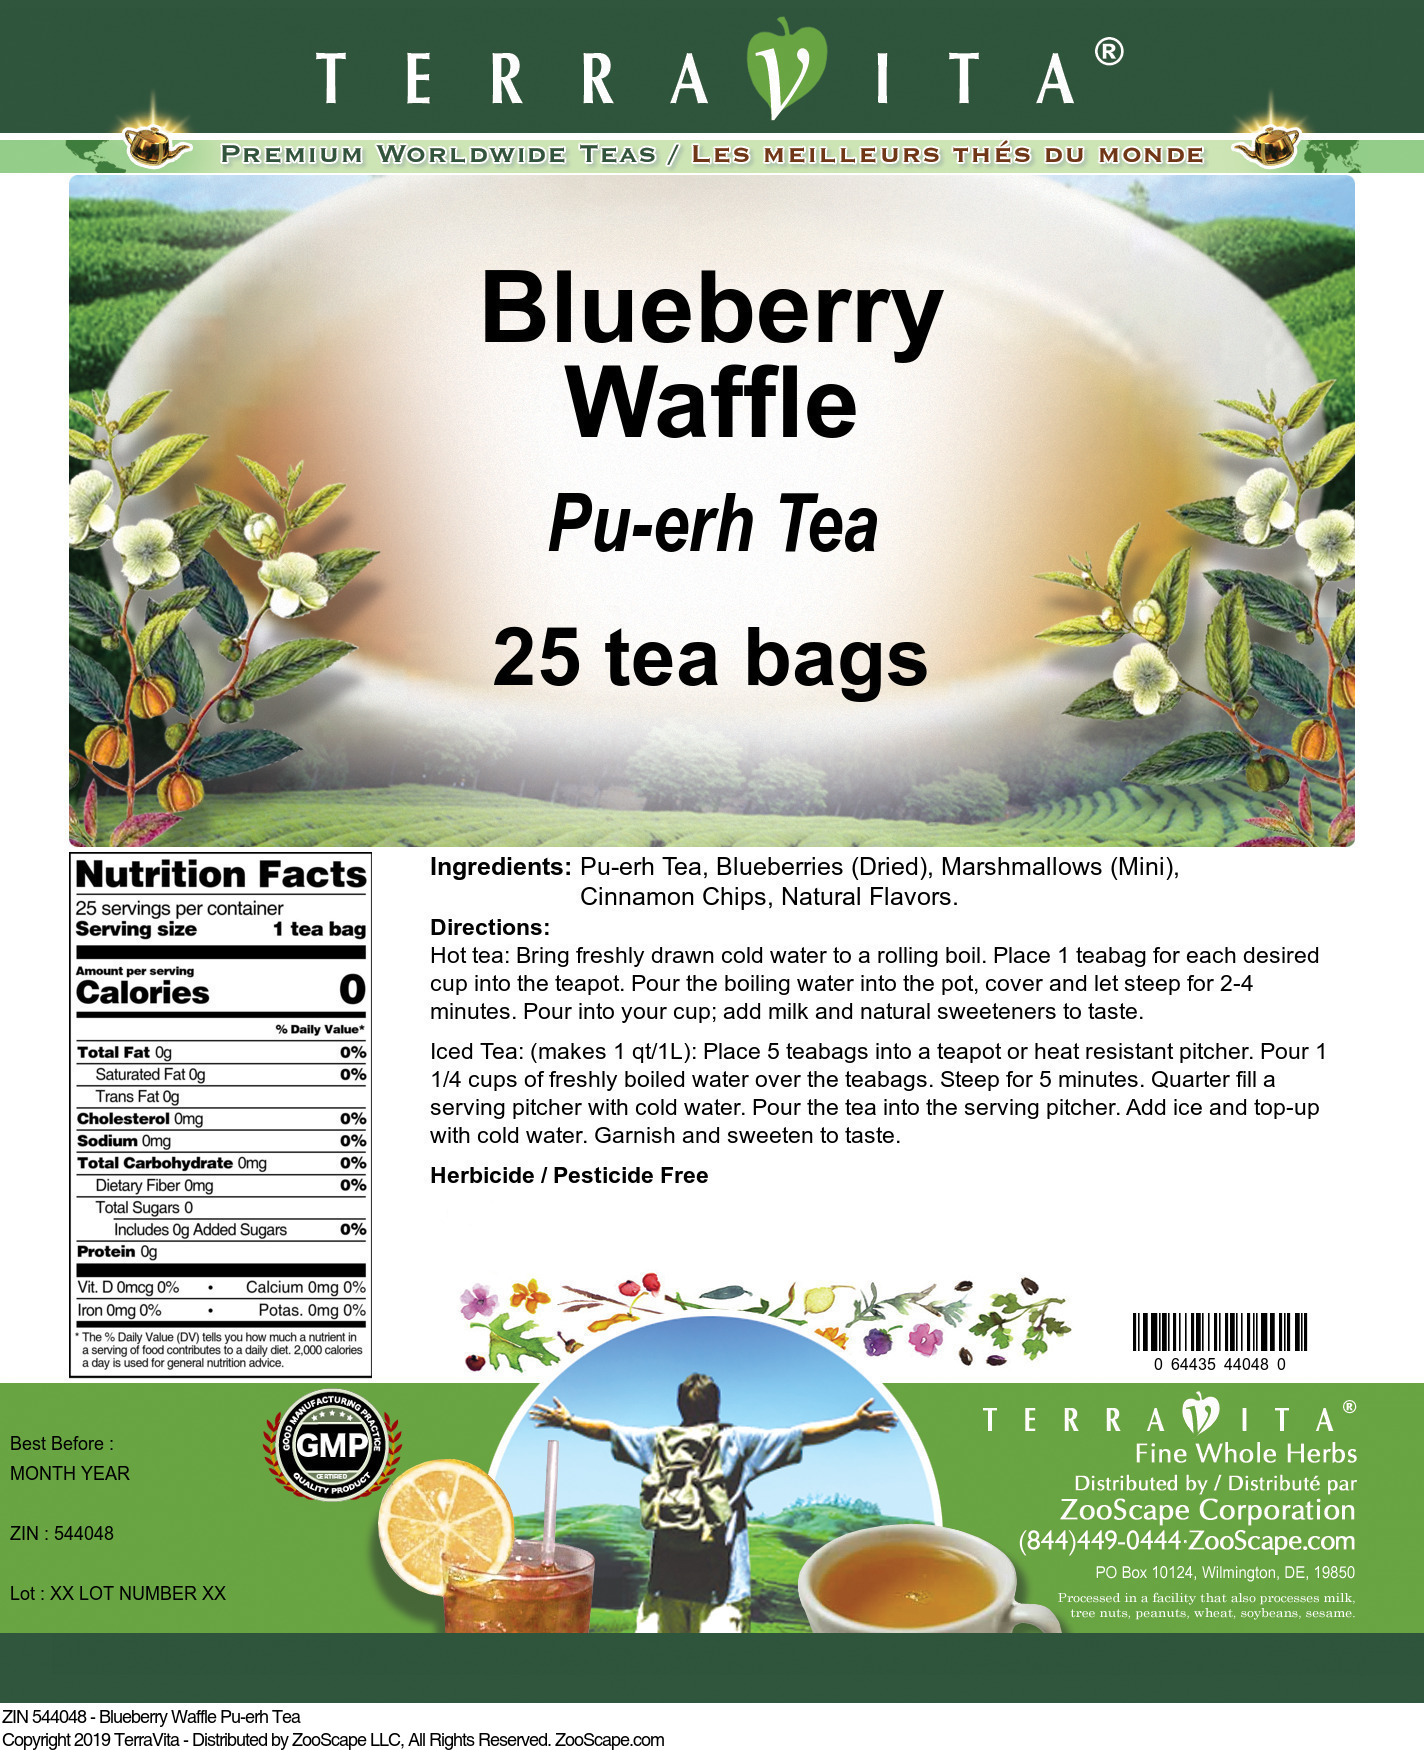 Blueberry Waffle Pu-erh Tea - Label